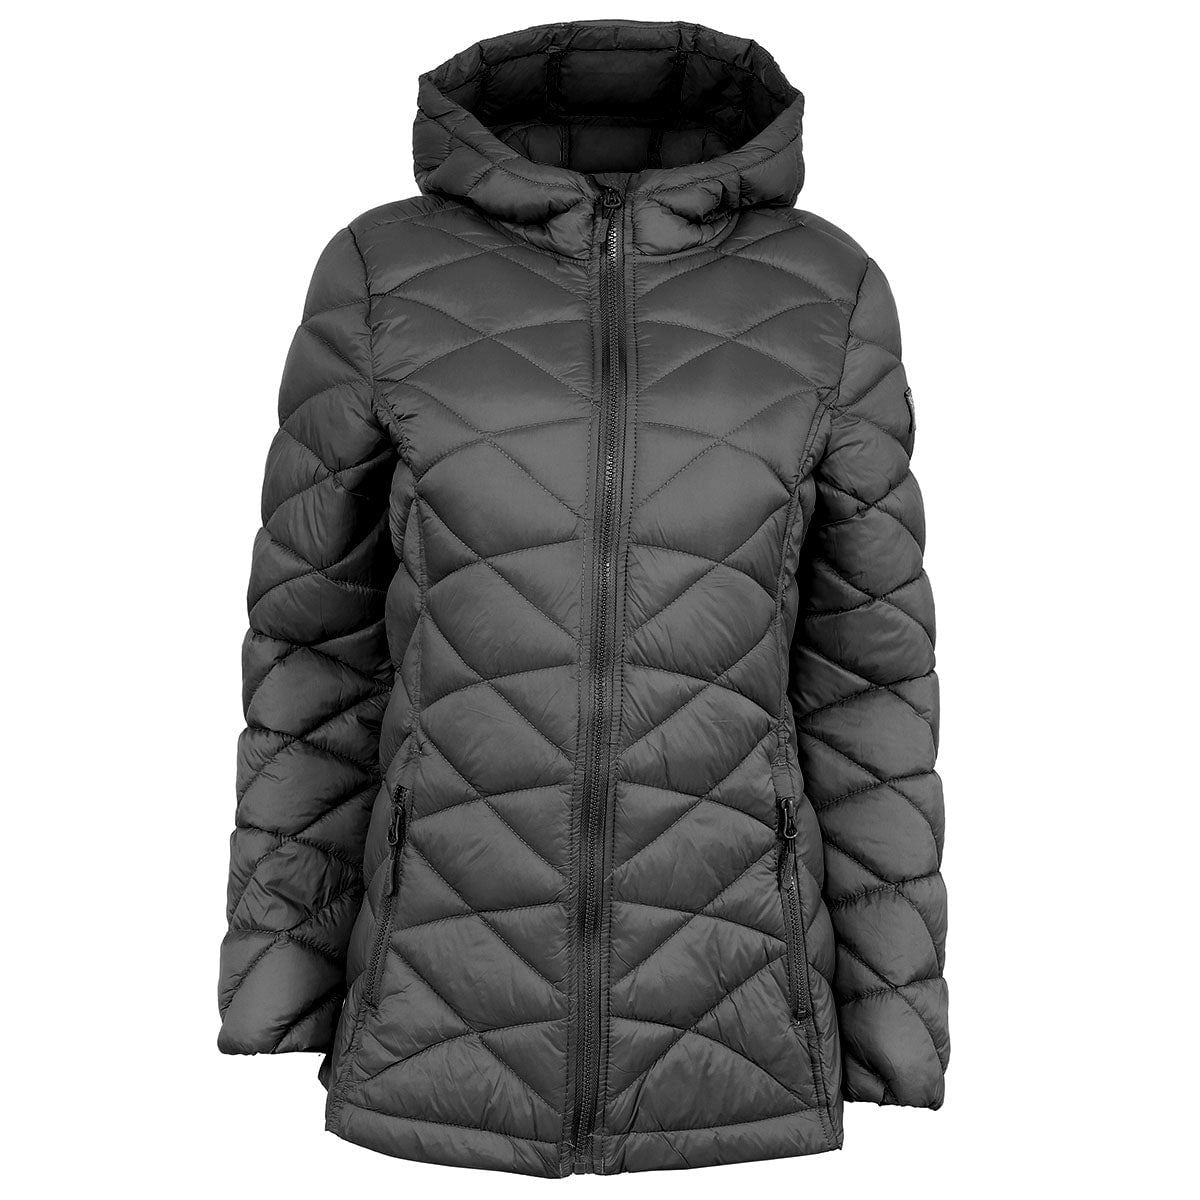 Reebok Women's Glacier Shield Jacket - Walmart.com